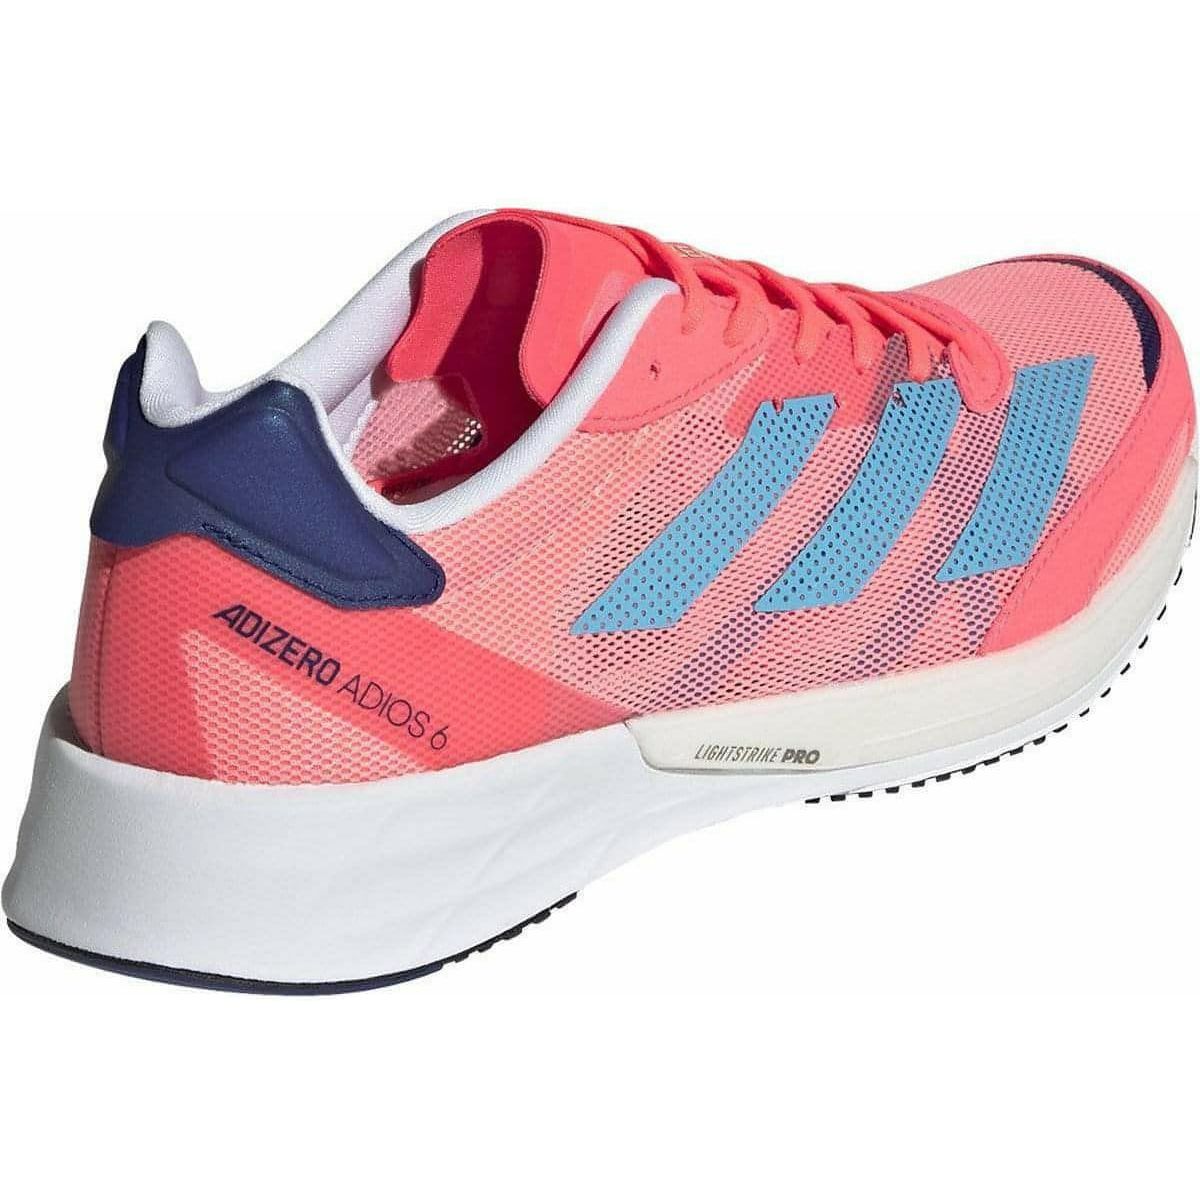 adidas Adizero Adios 6 Boost Womens Running Shoes - Pink - Start Fitness